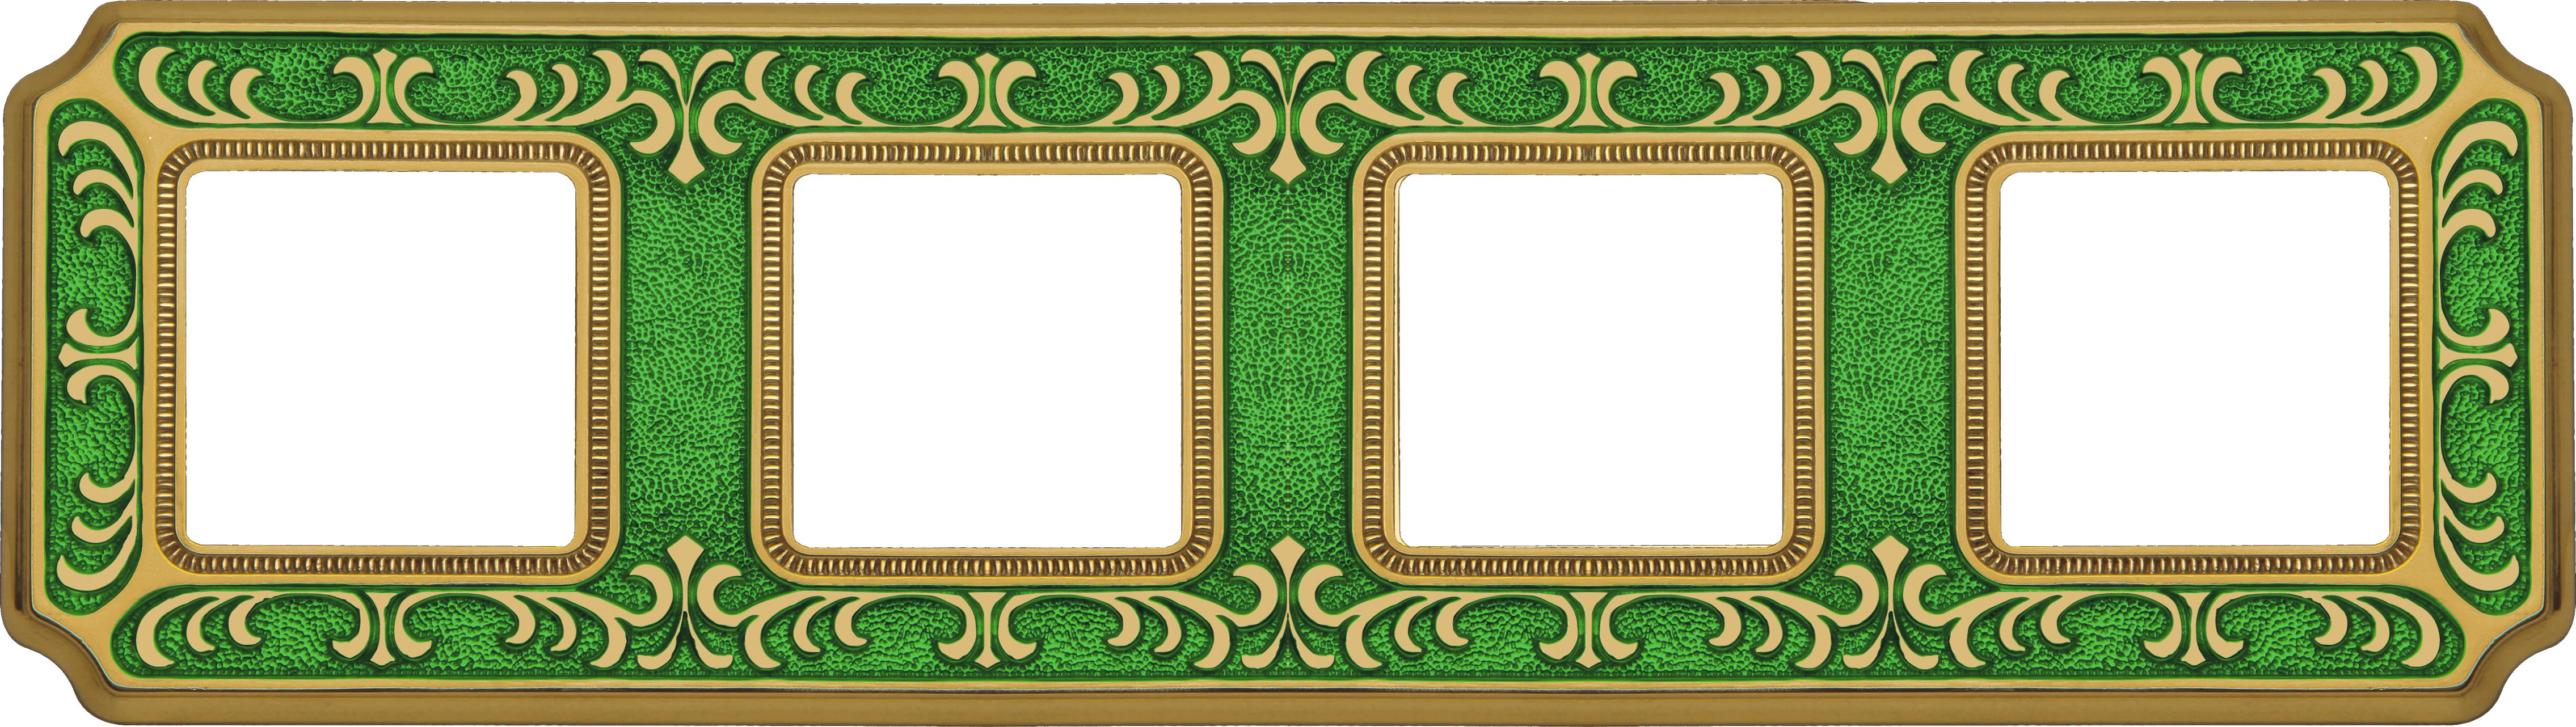 артикул FD01354VEEN название Рамка 4-ая (четверная) , Fede, Серия Siena, Изумрудно-зеленый